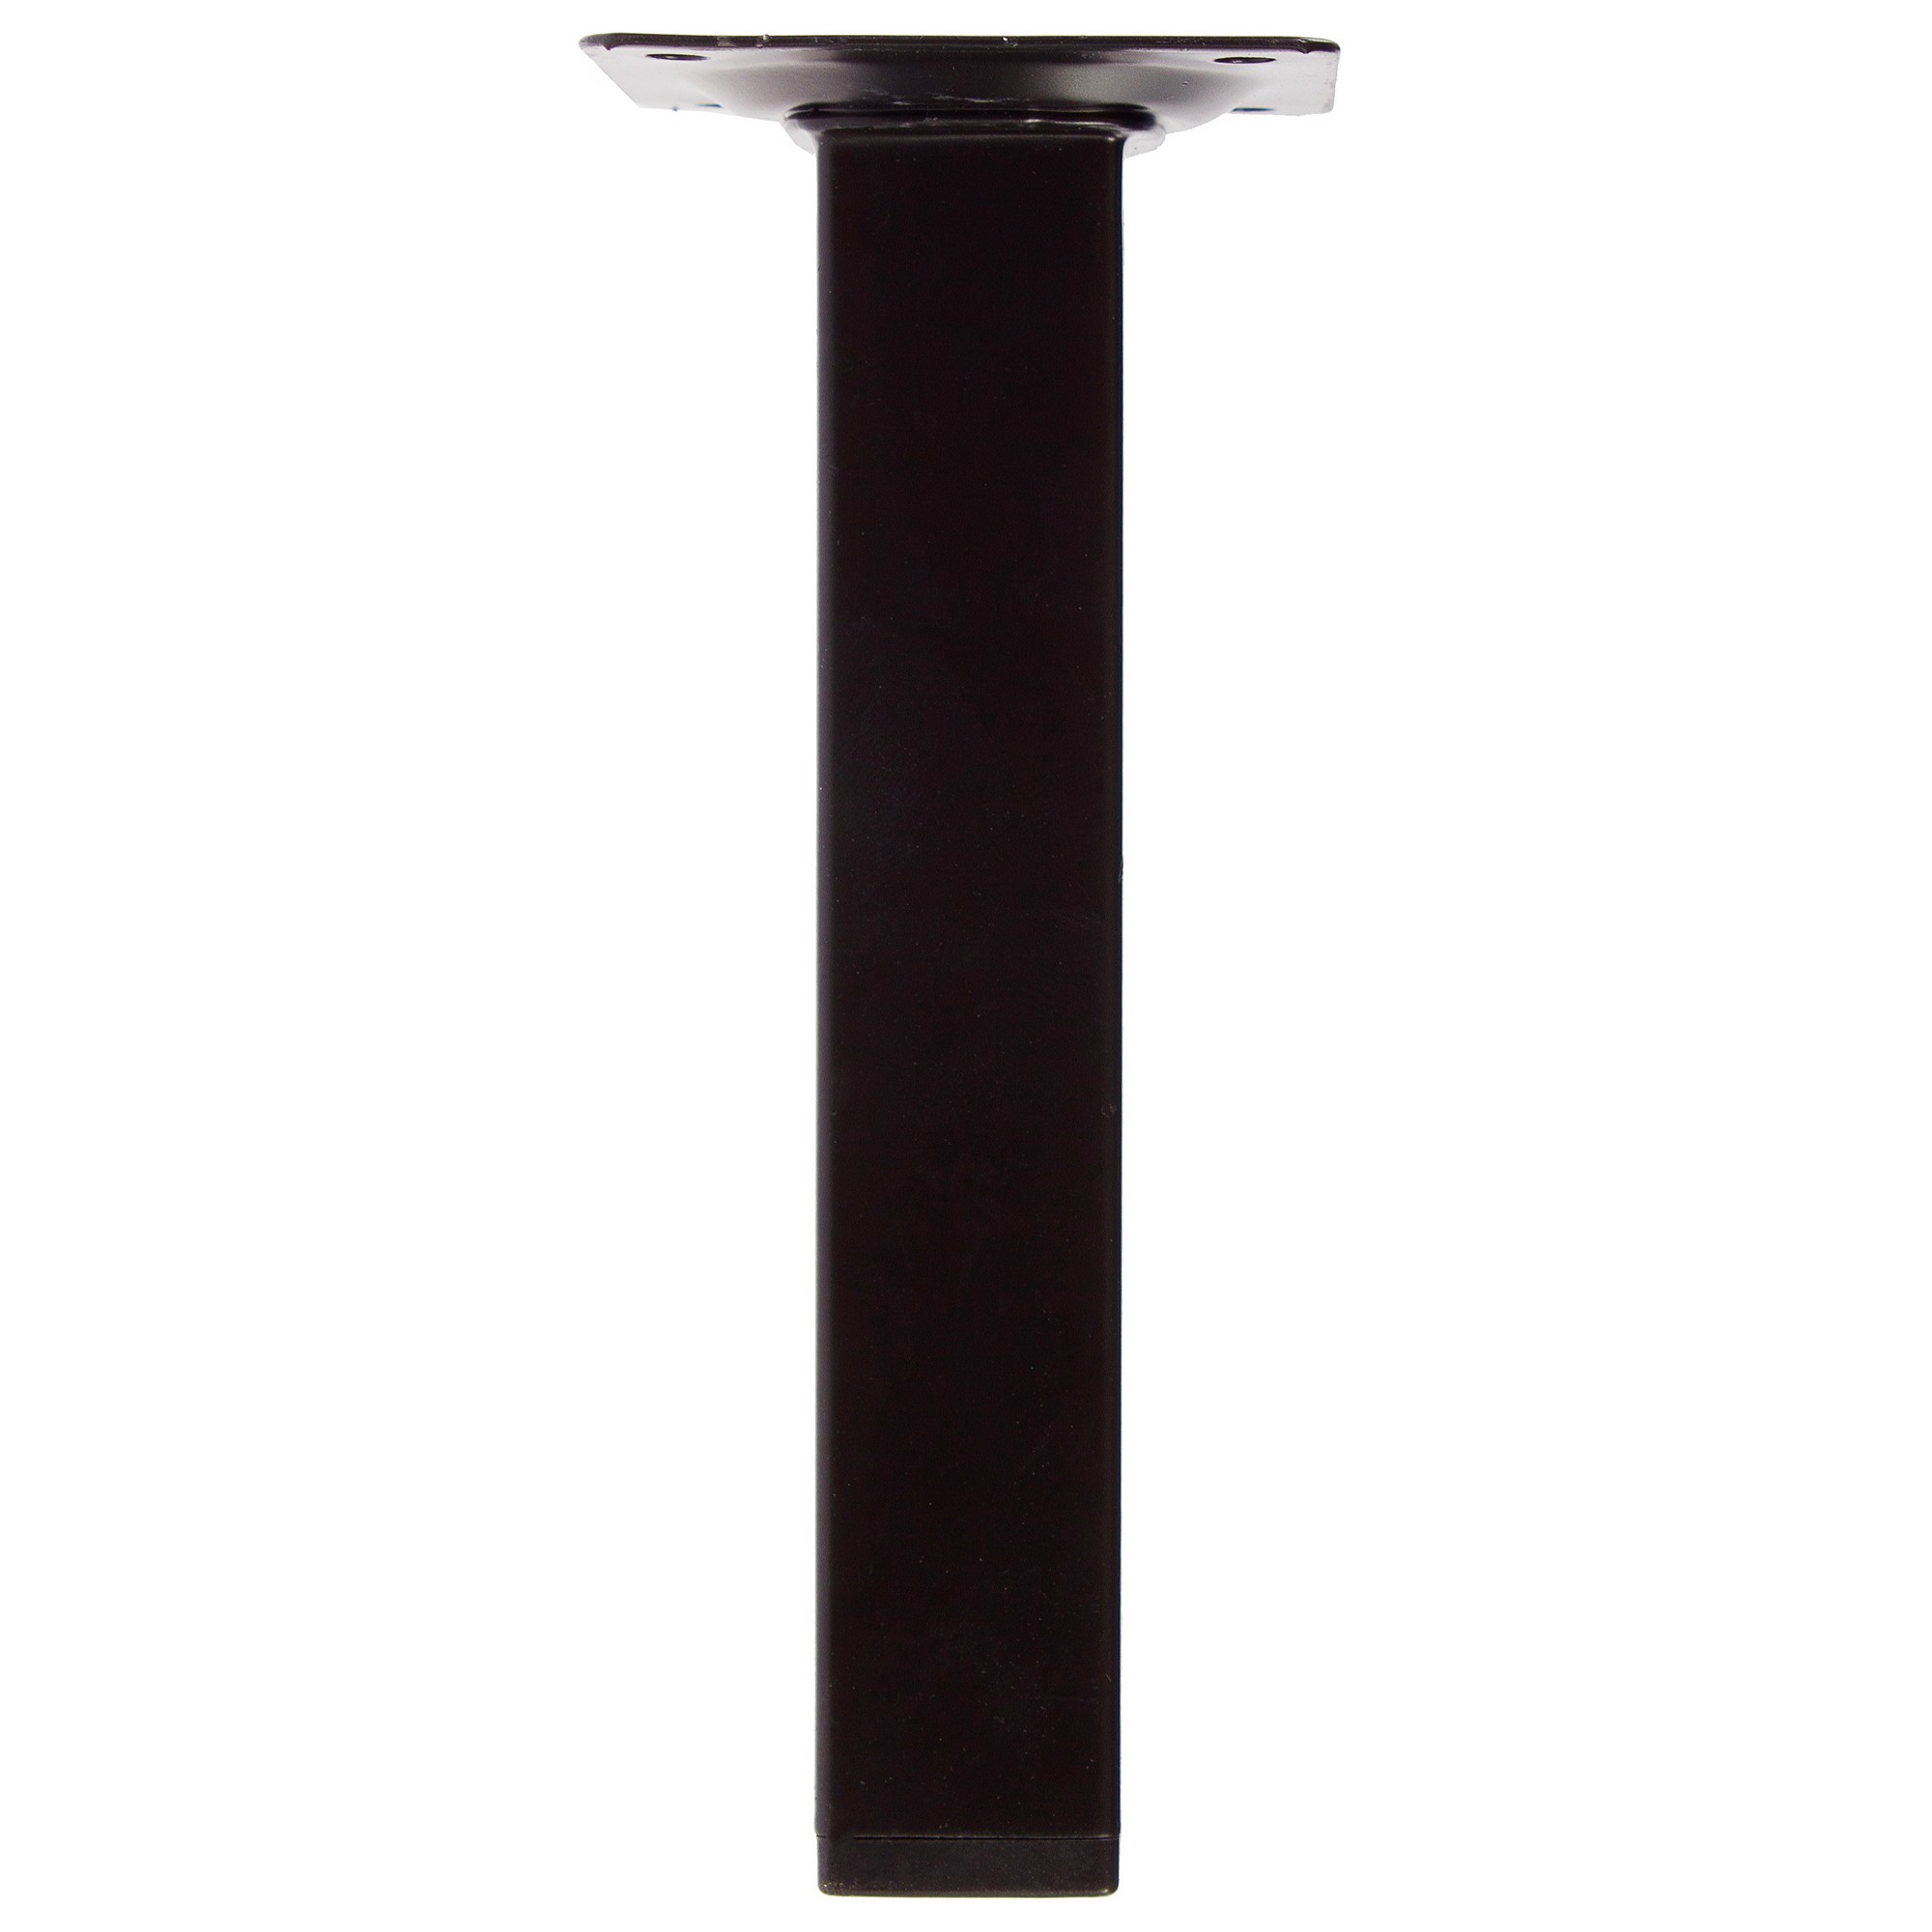 Опоры 150 мм. Опора черн квадрат 150 мм. KAX-0141-b13 опора мебельная (комплект из 3-х опор), чёрный. ESL 307-150 Black опора мебельная, чёрный. Опора металл черная 150 мм.